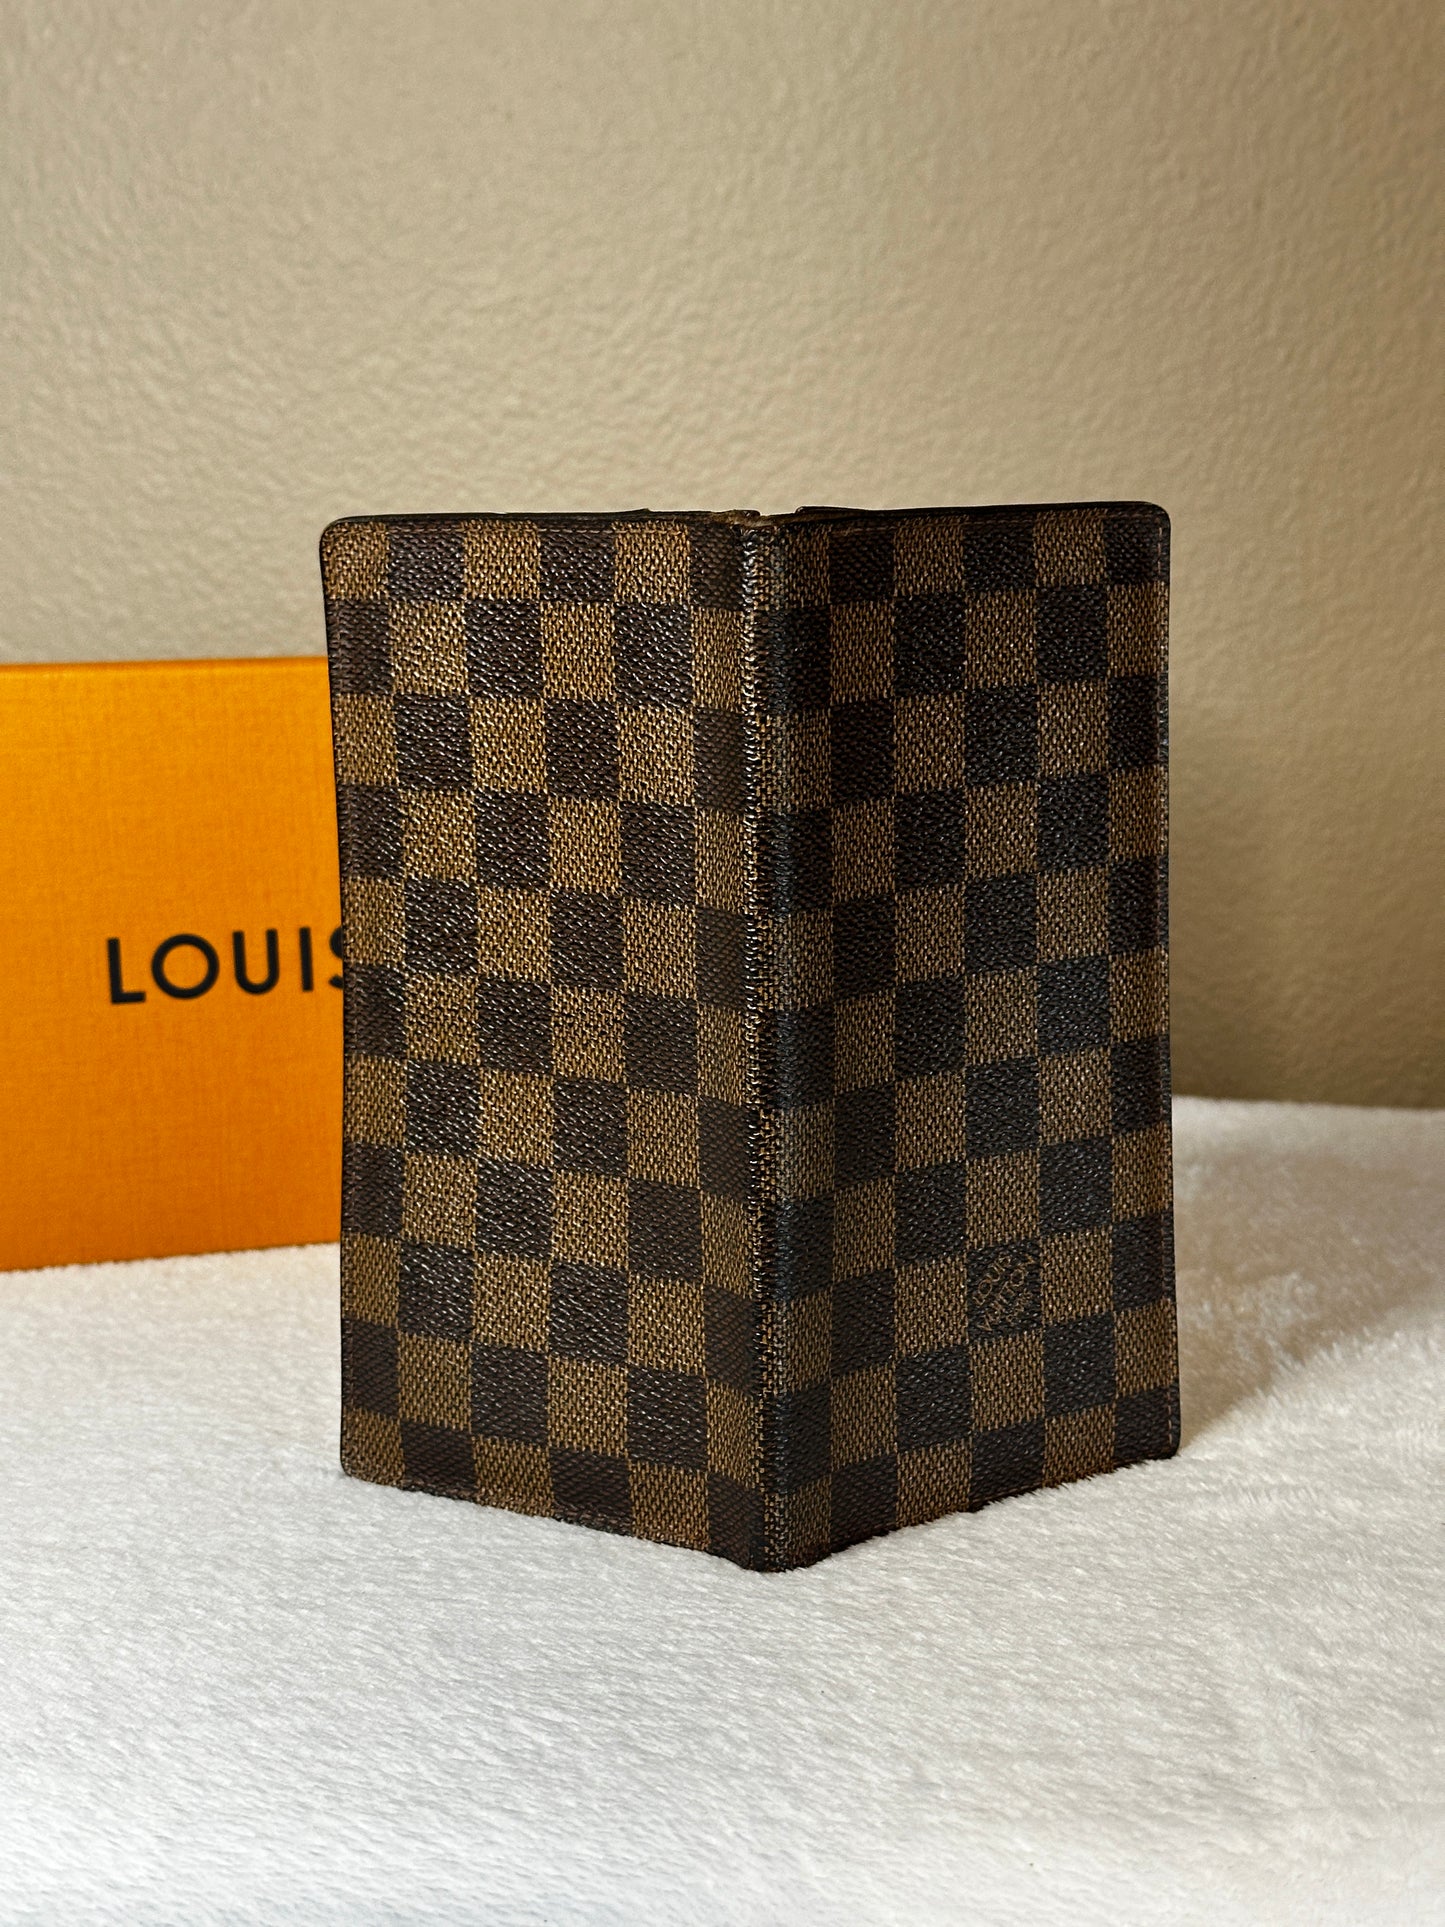 Authentic Louis Vuitton Damier Ebene Brazza Checkbook Wallet